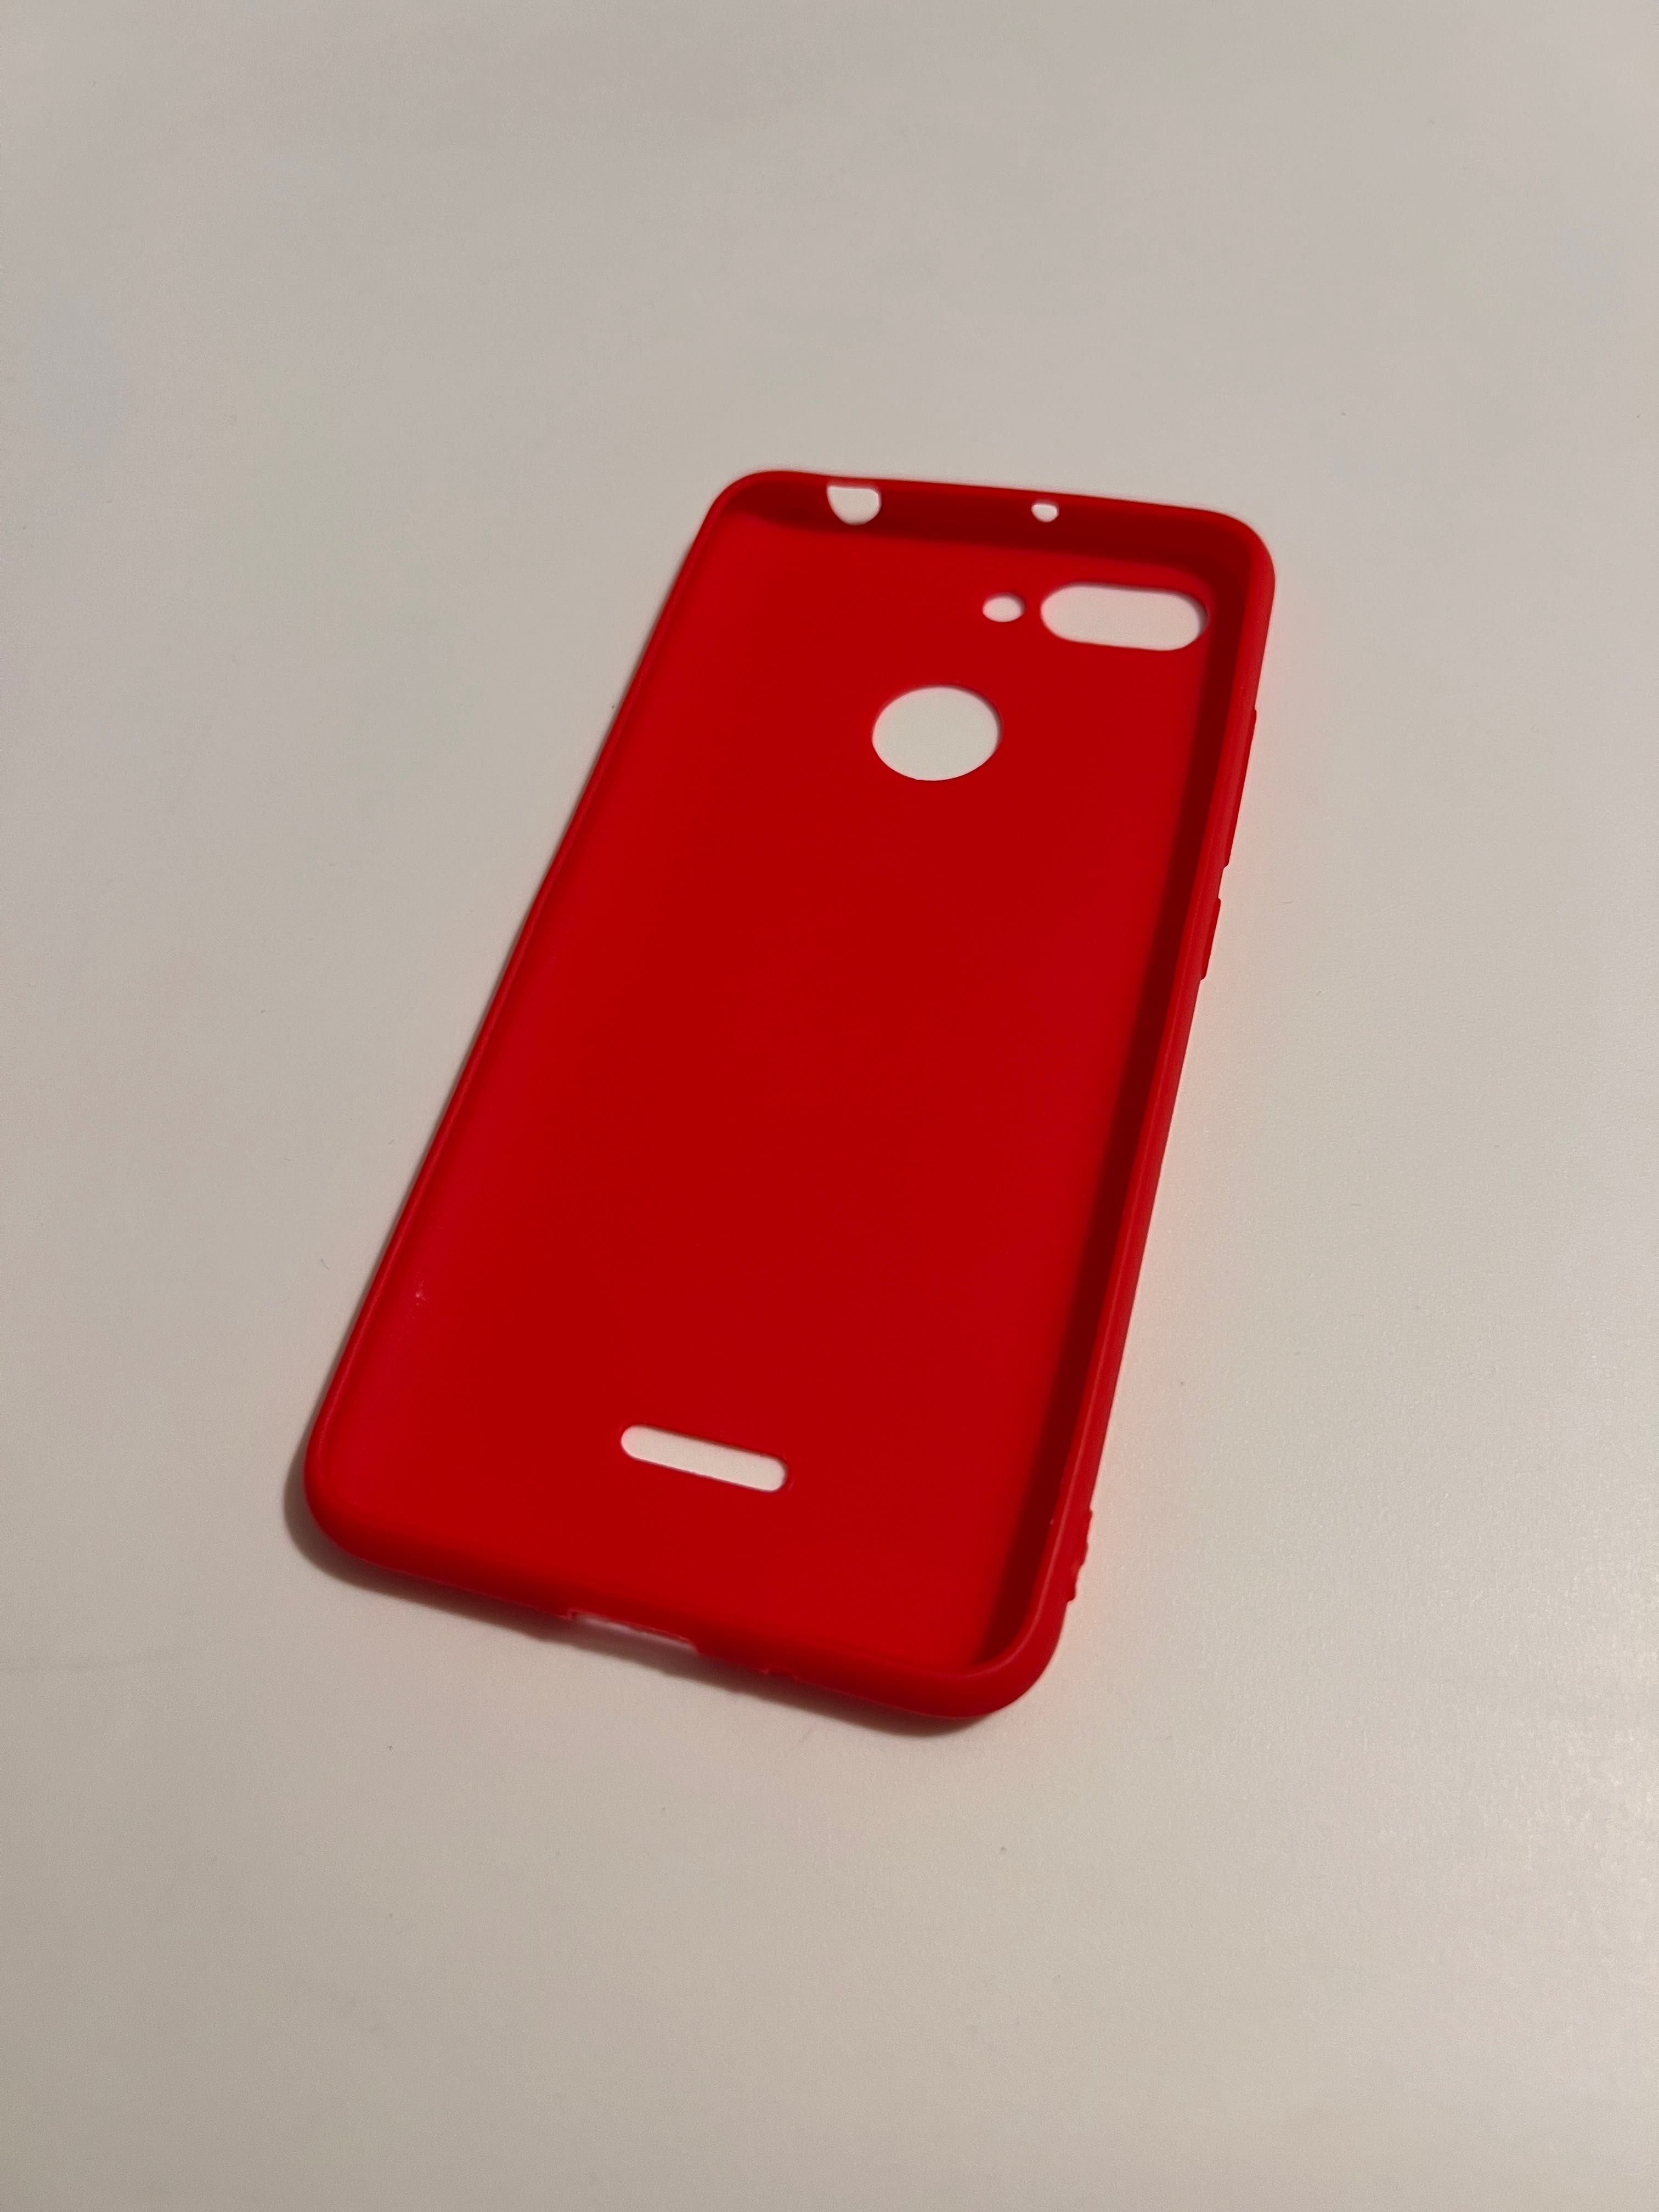 Czerwone etui/obudowa/case gumowe na telefon Xiaomi Redmi 6